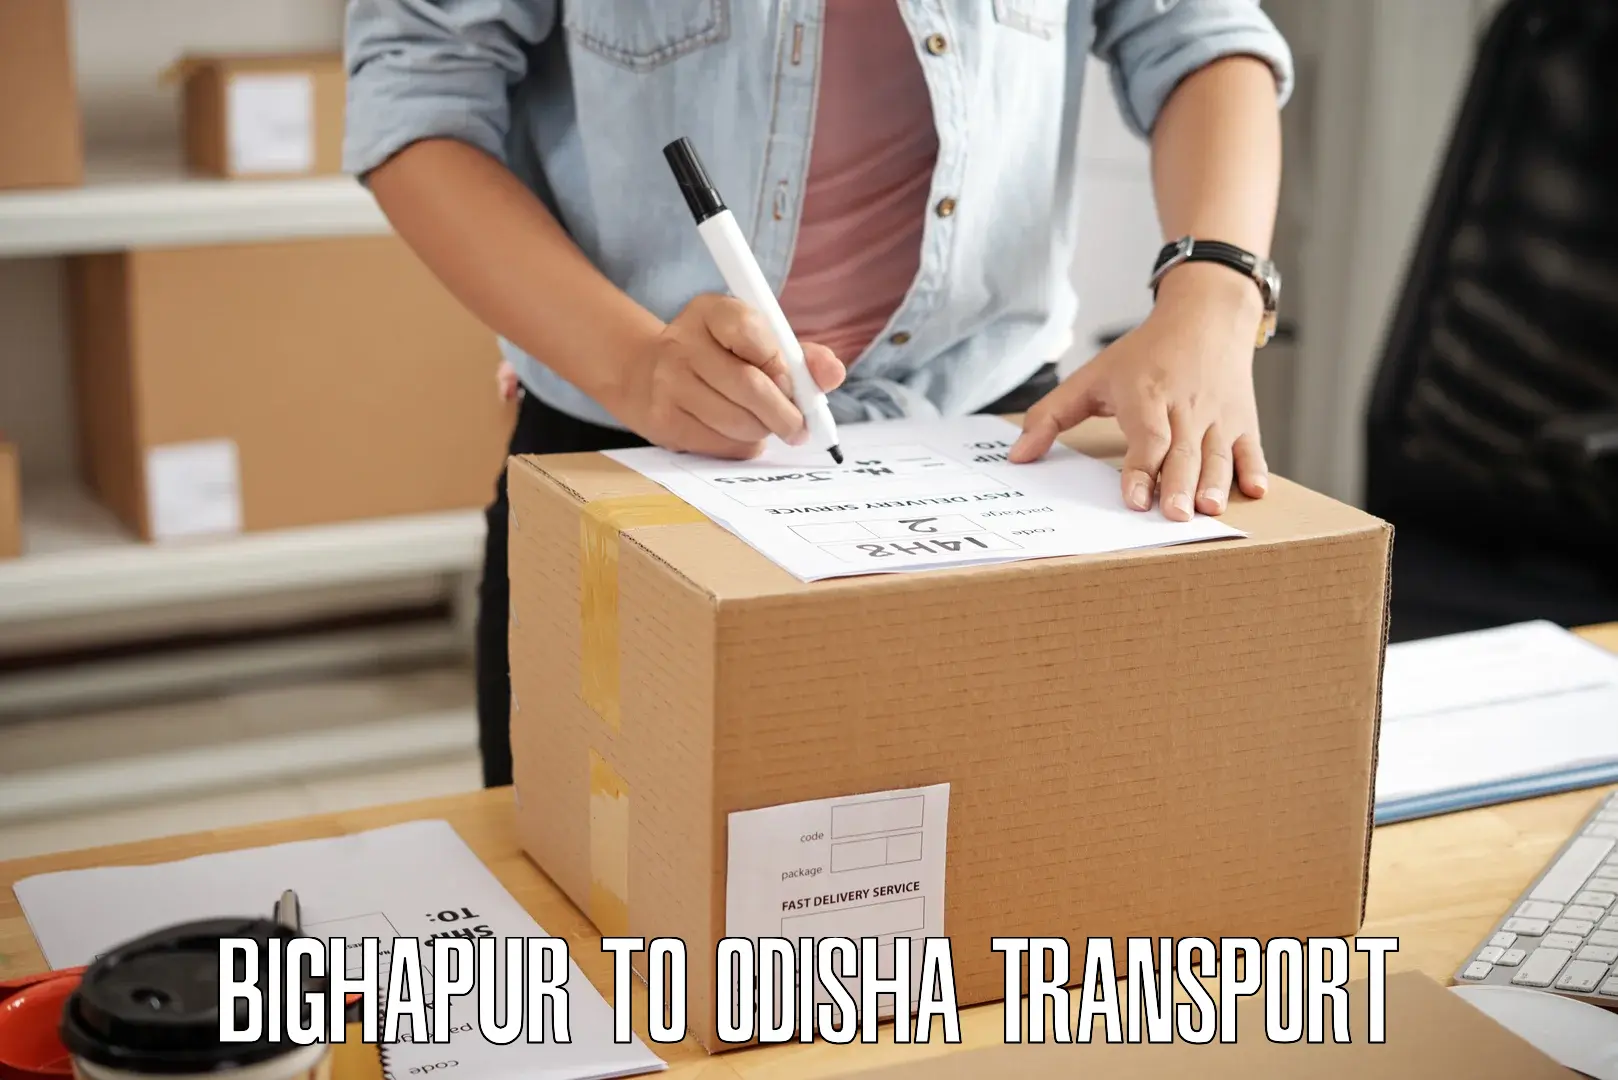 Vehicle parcel service Bighapur to Kishorenagar